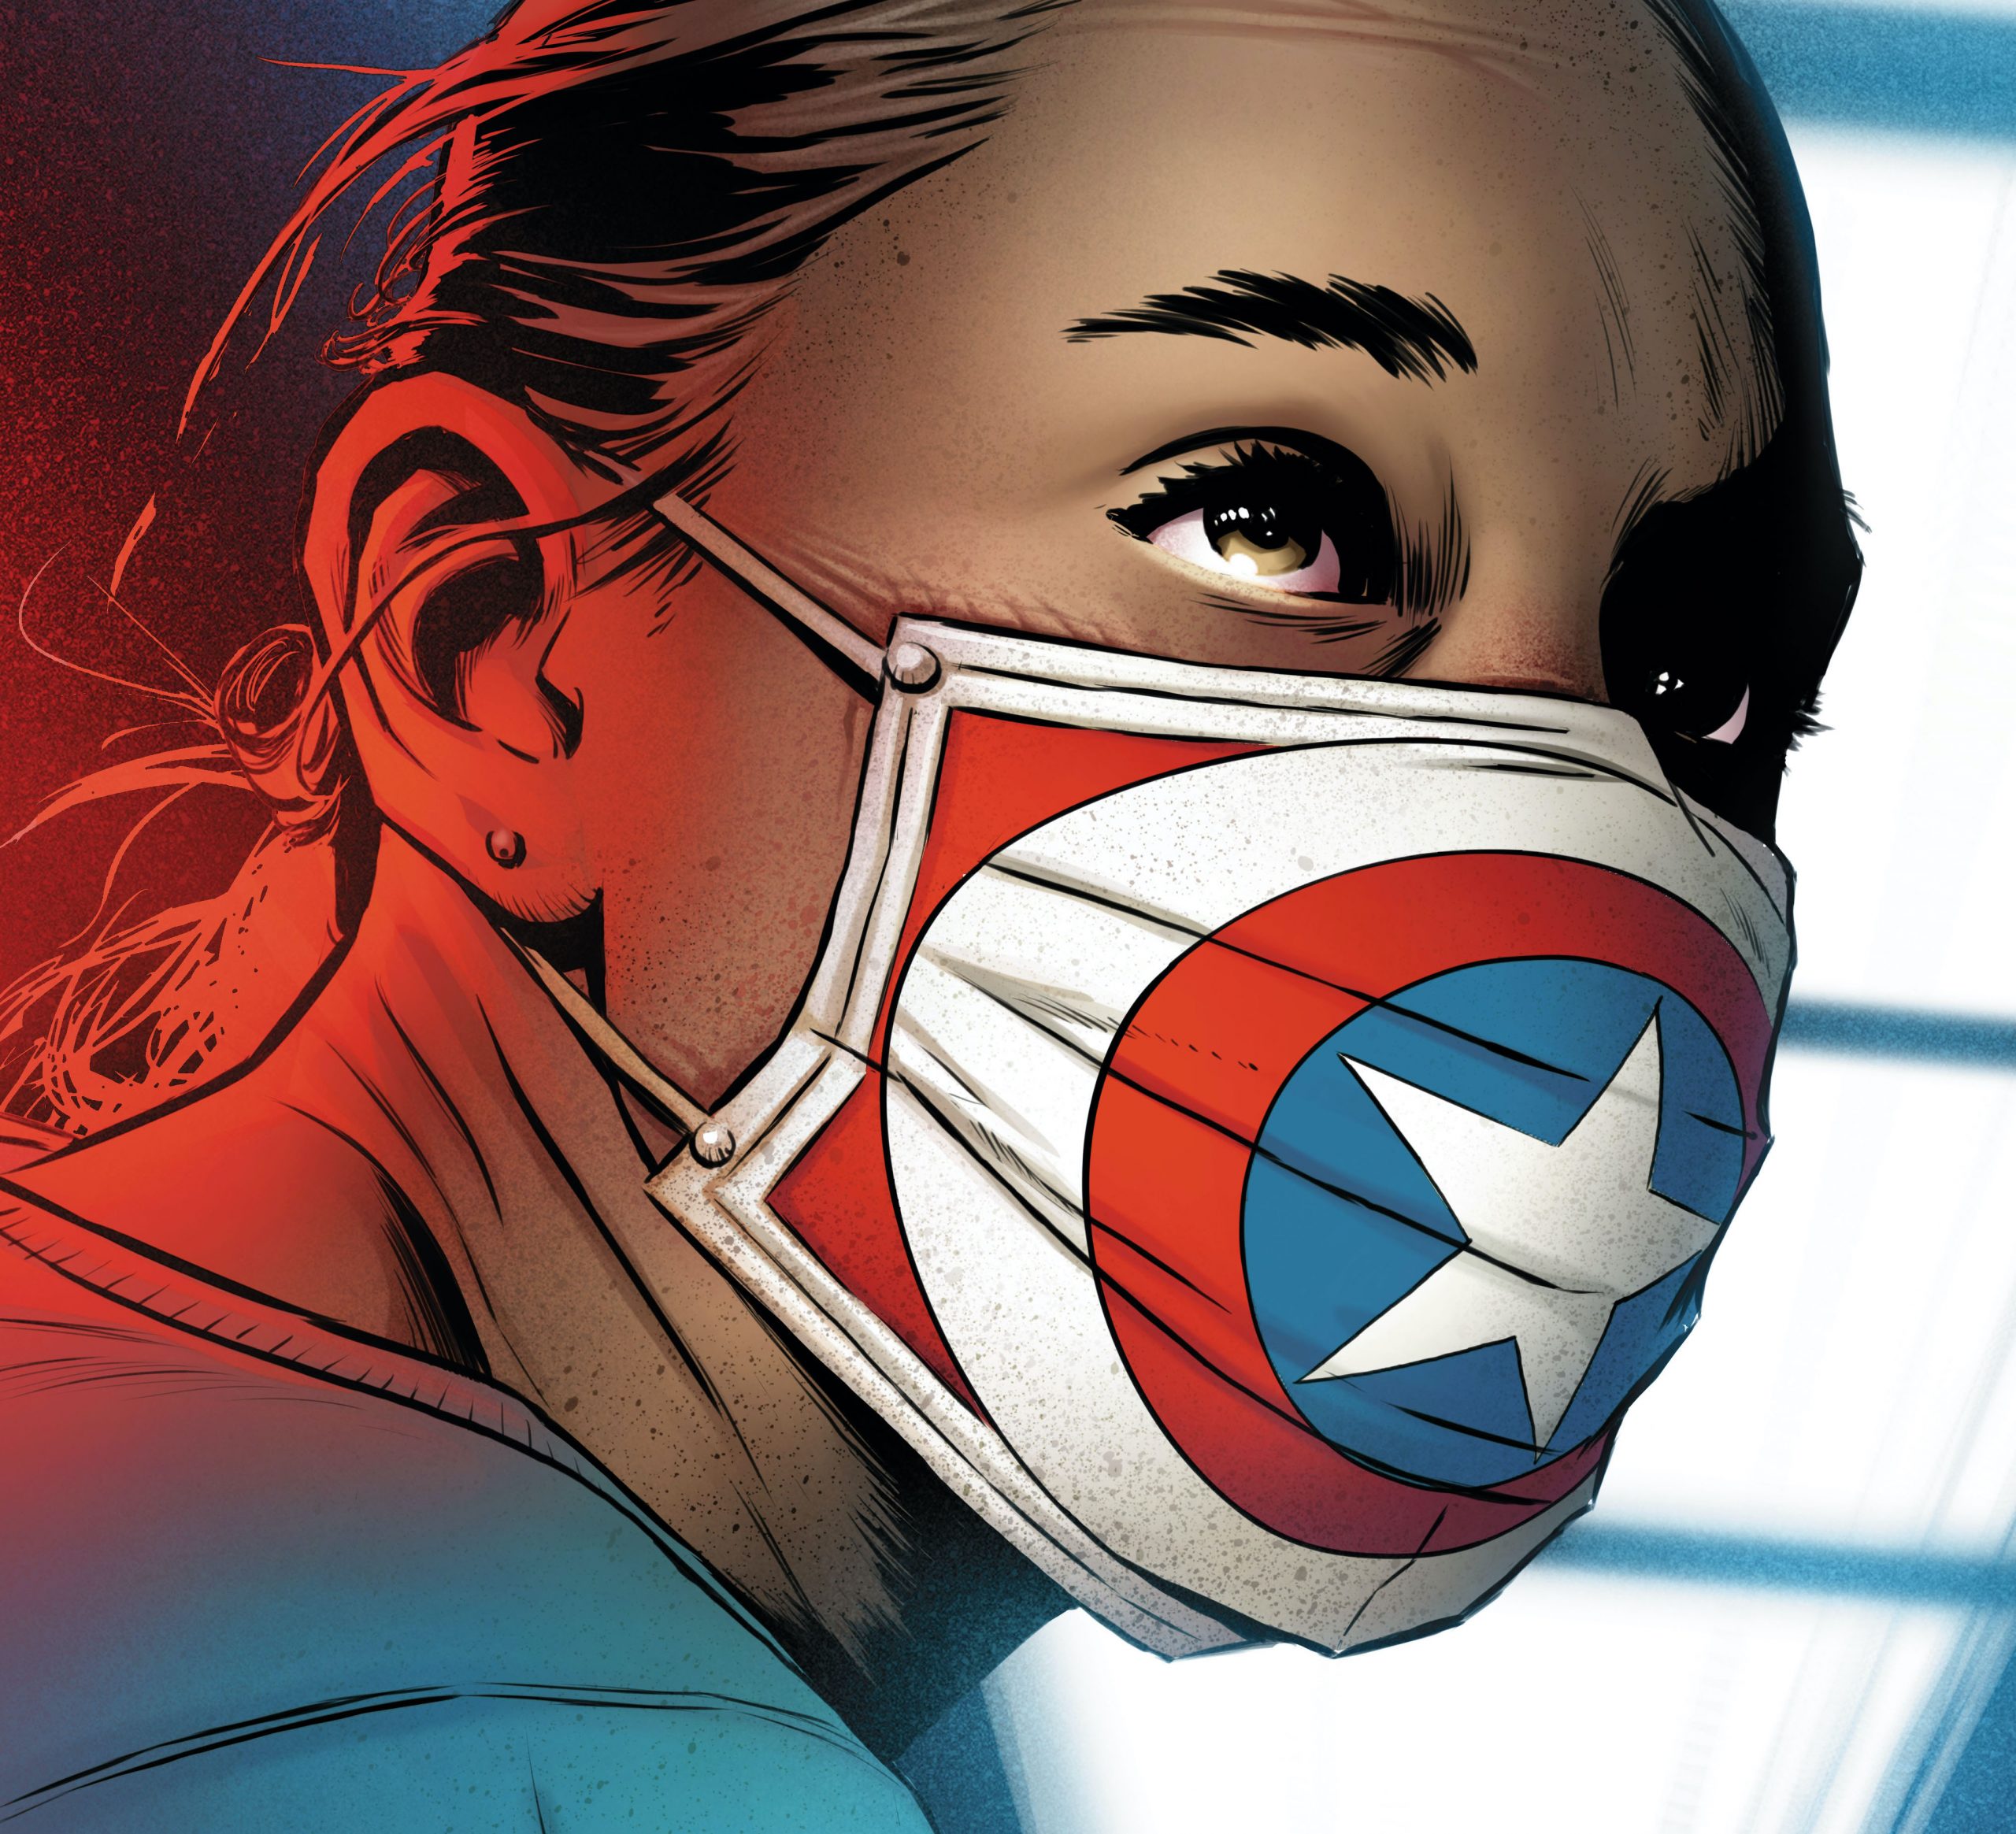 Marvel Comics debuts Joe Quesada and Richard Isanove's art in honor of healthcare heroes